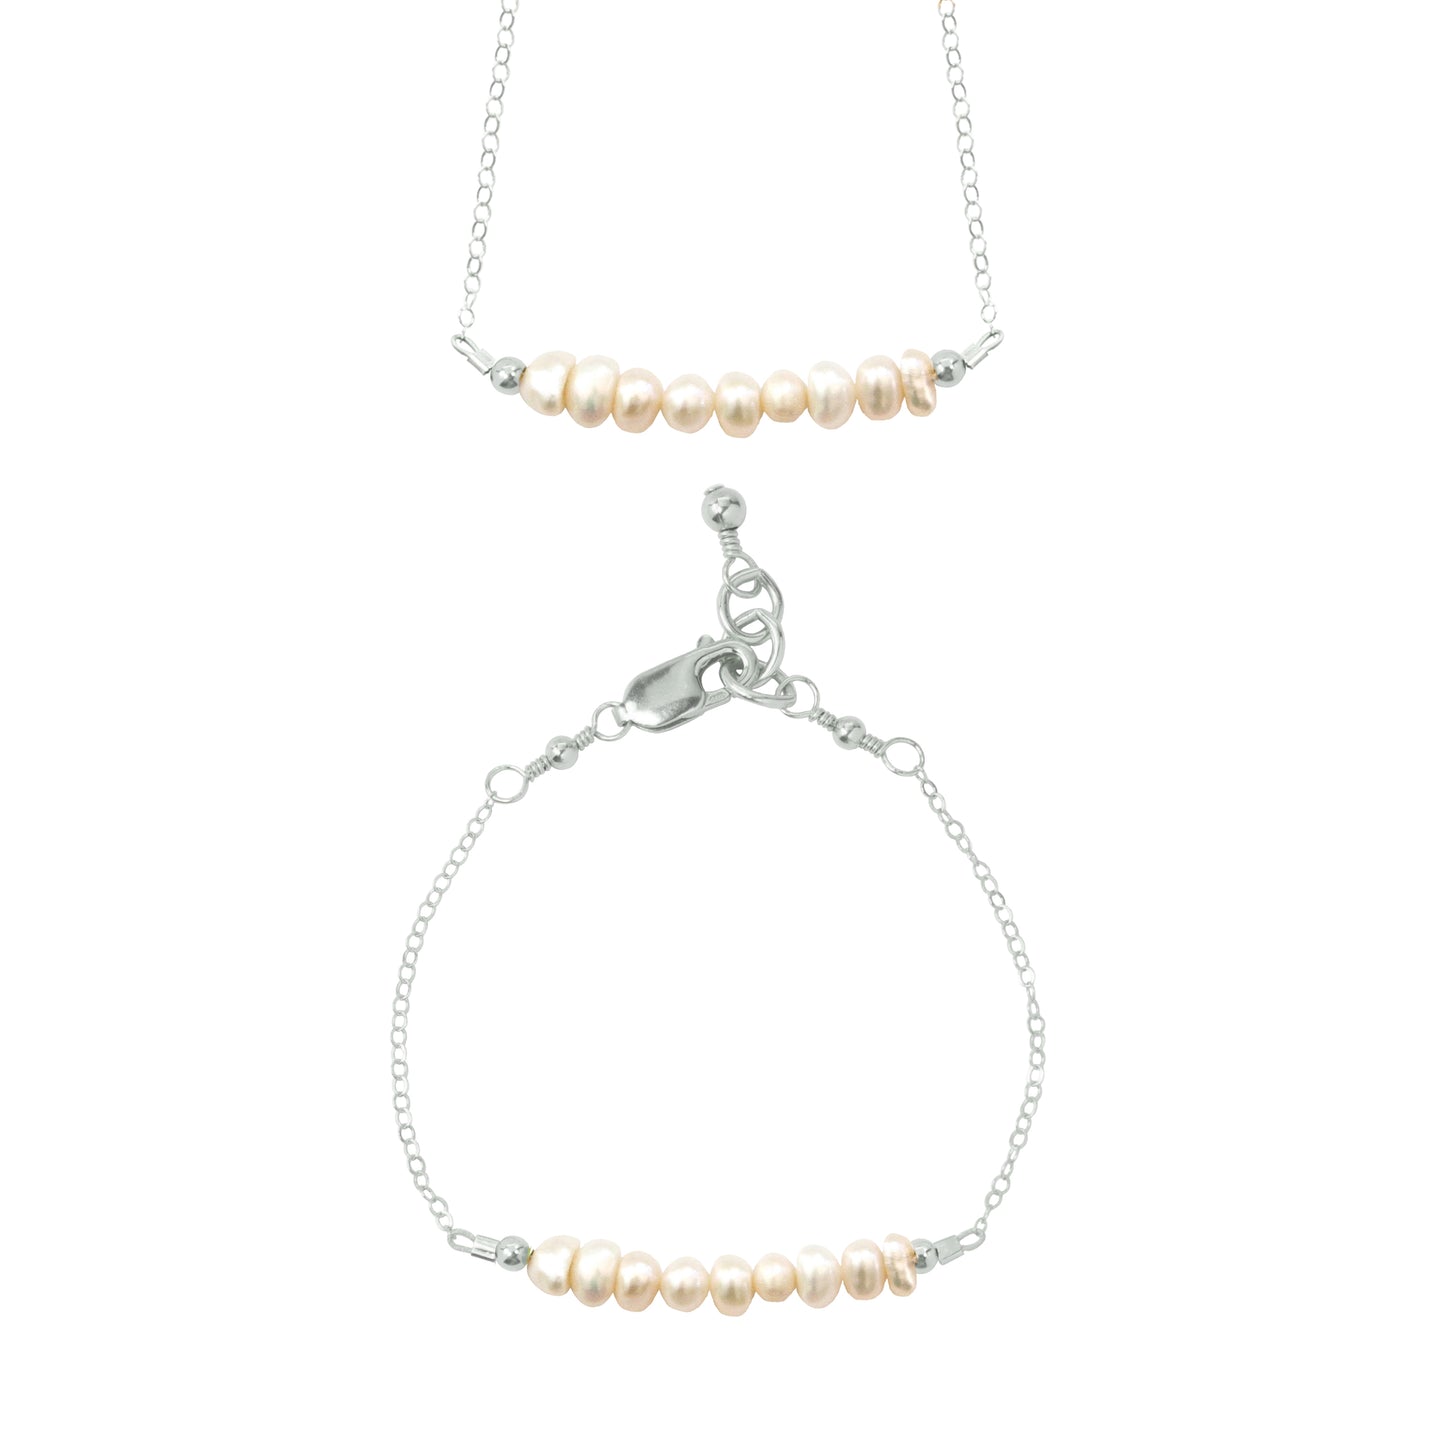 Freshwater Pearl Choker Necklace + Chain Bracelet Set (6MM beads)